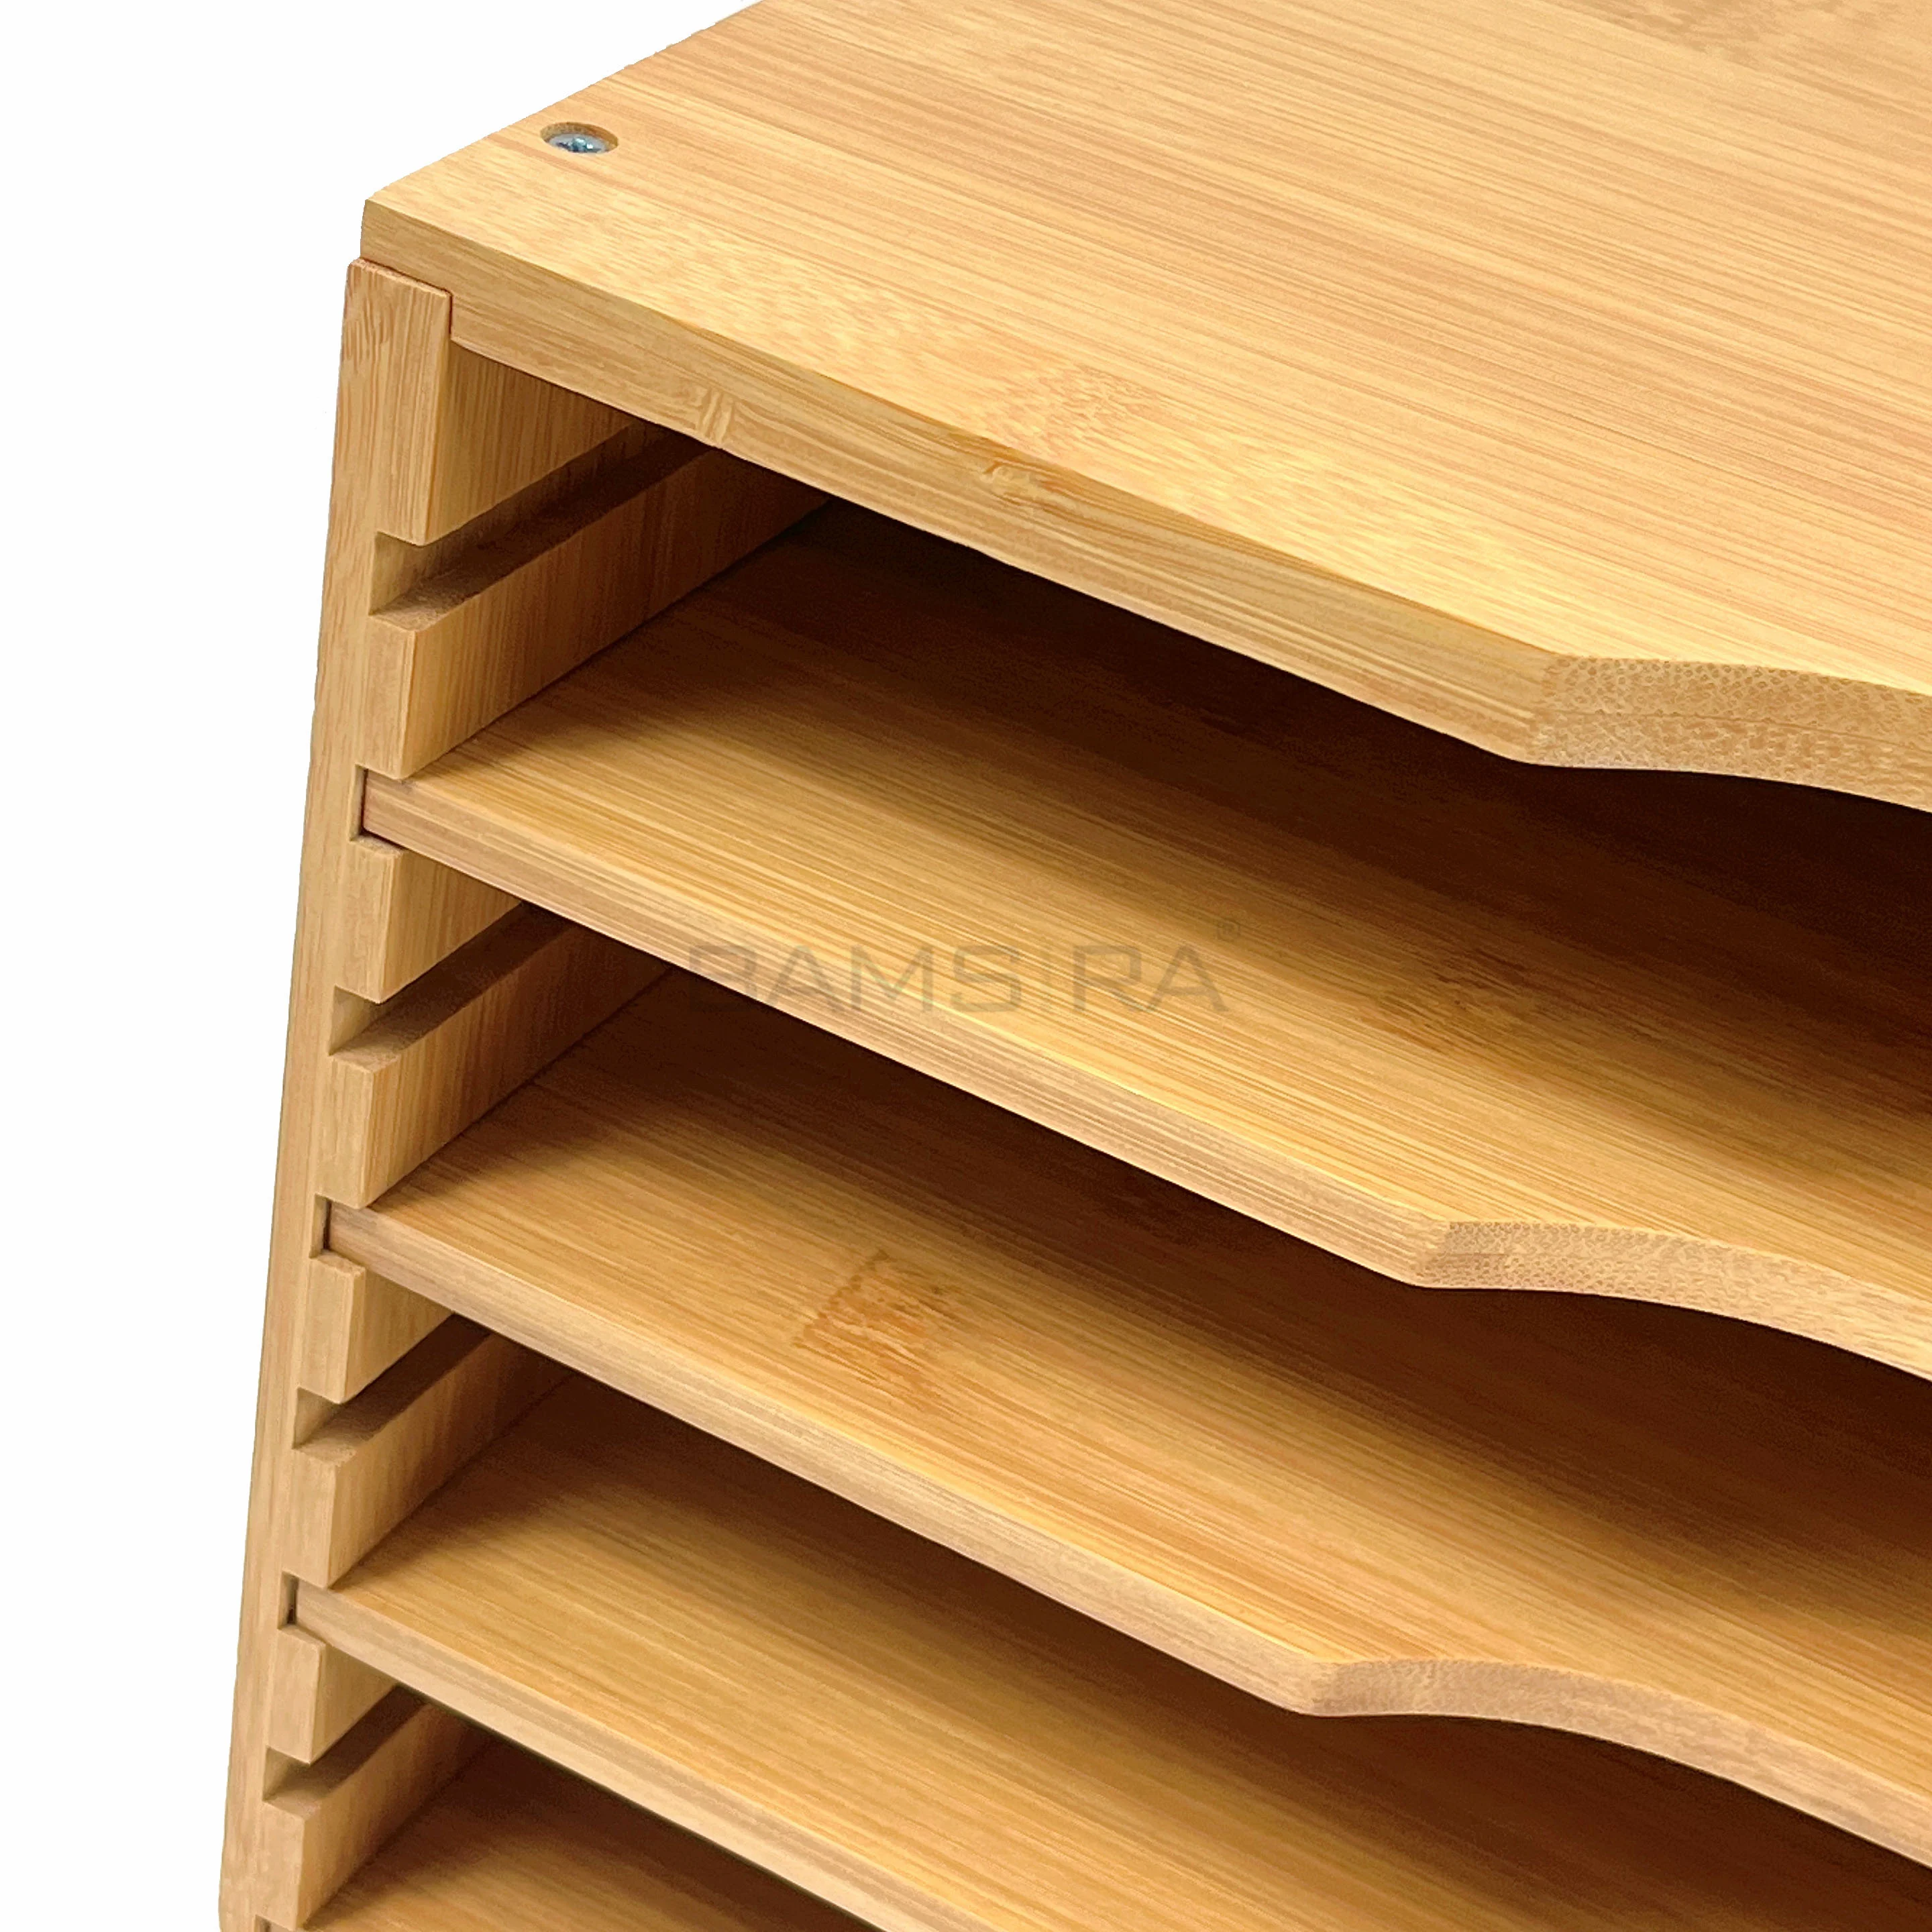 Bamboo Desk File Organizer Tray, 5 Slots Office Paper Sorter, Large Document Storage Rack